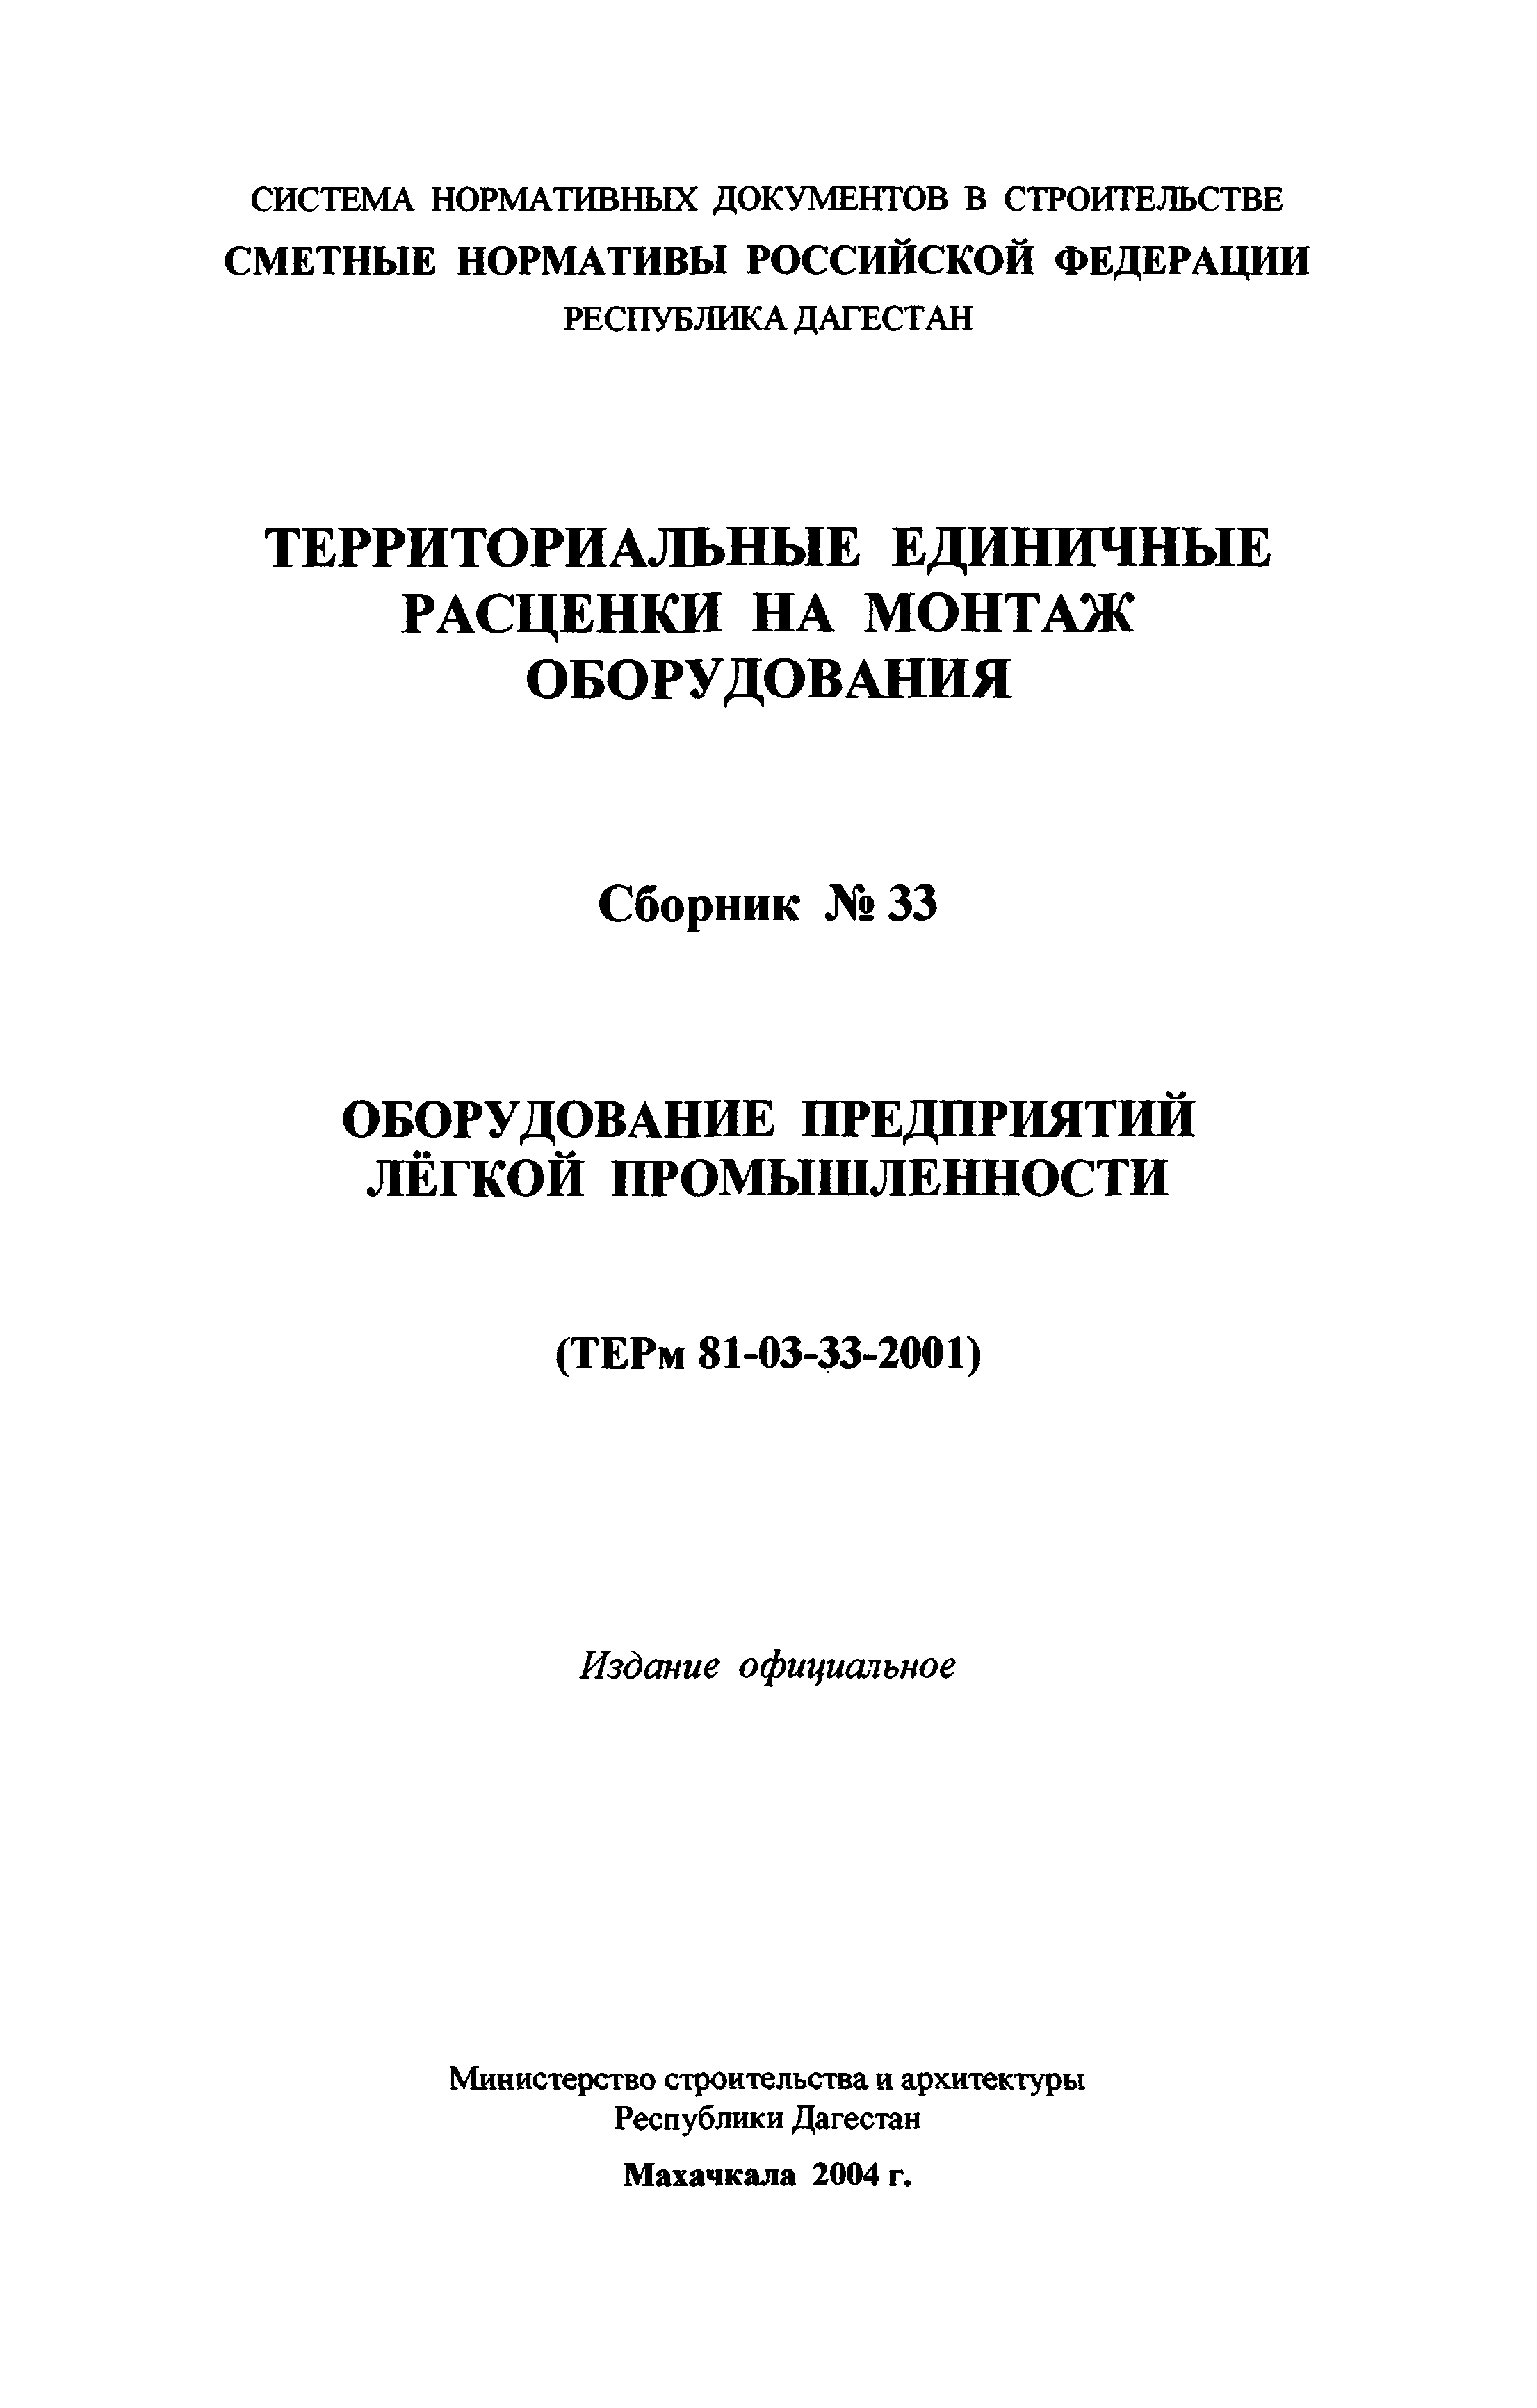 ТЕРм Республика Дагестан 2001-33